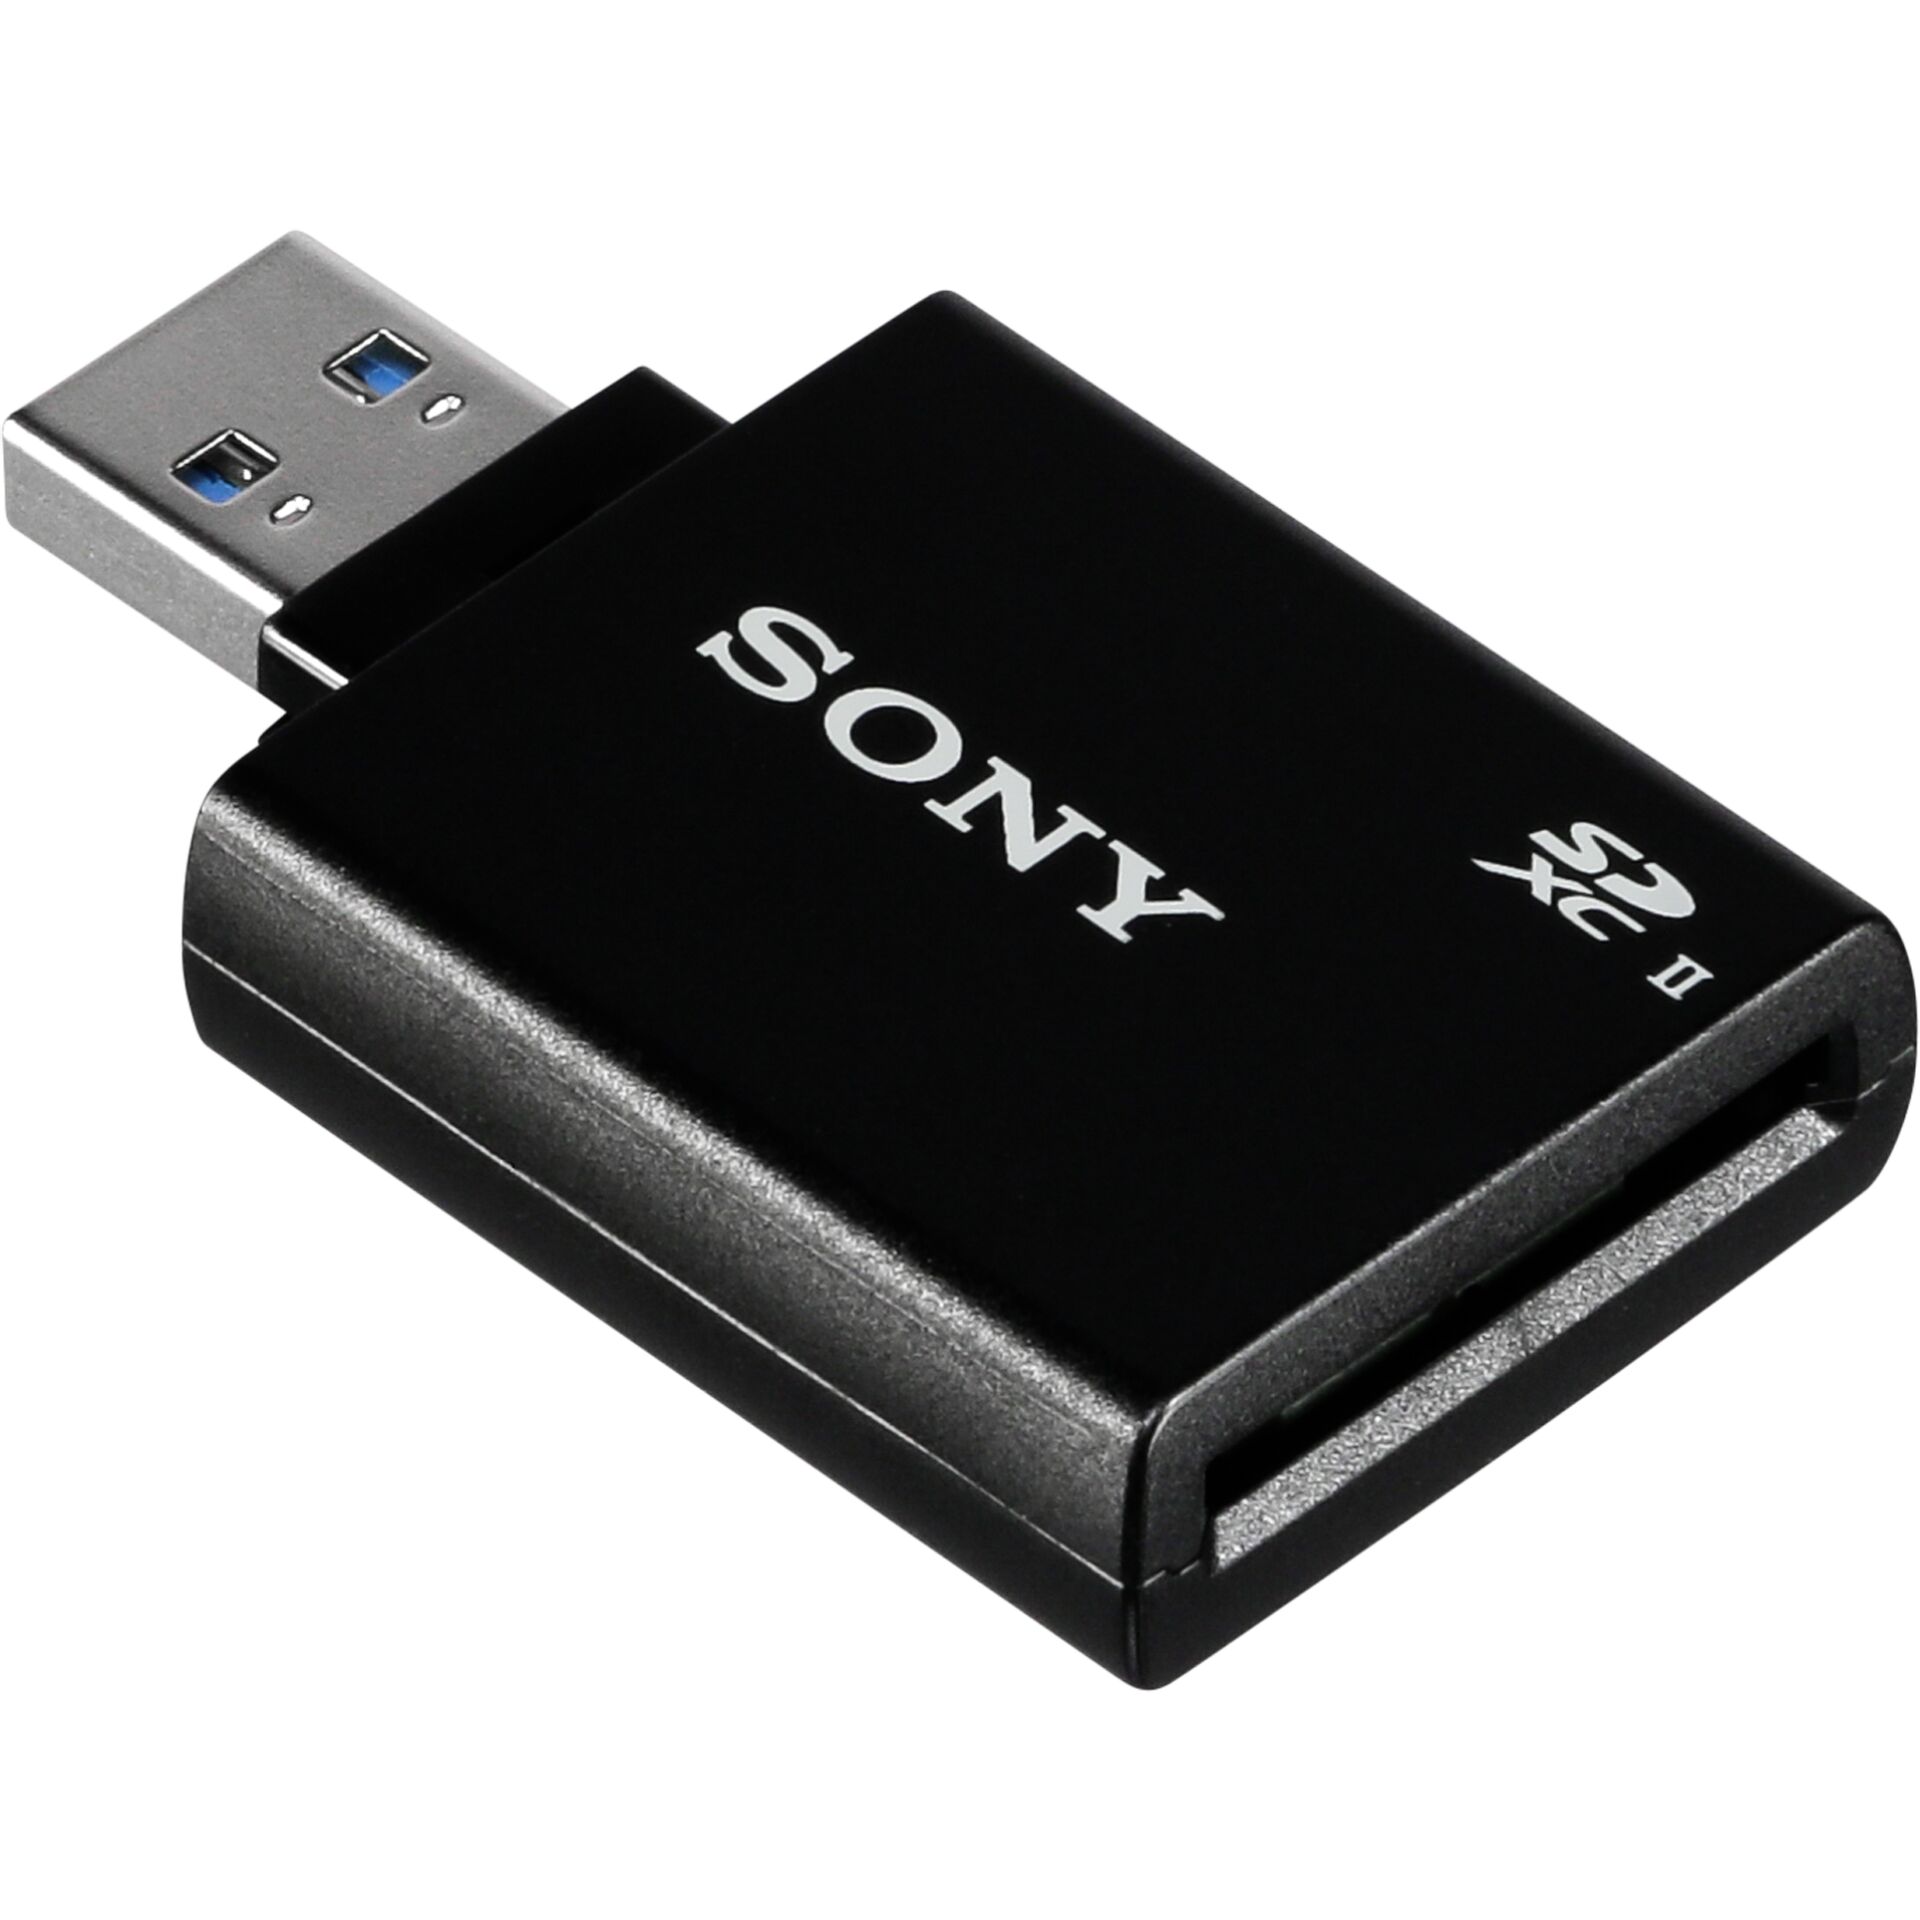 Sony SD-Card UHS-II Single-Slot-Cardreader, USB-A 3.0 [Stecker]